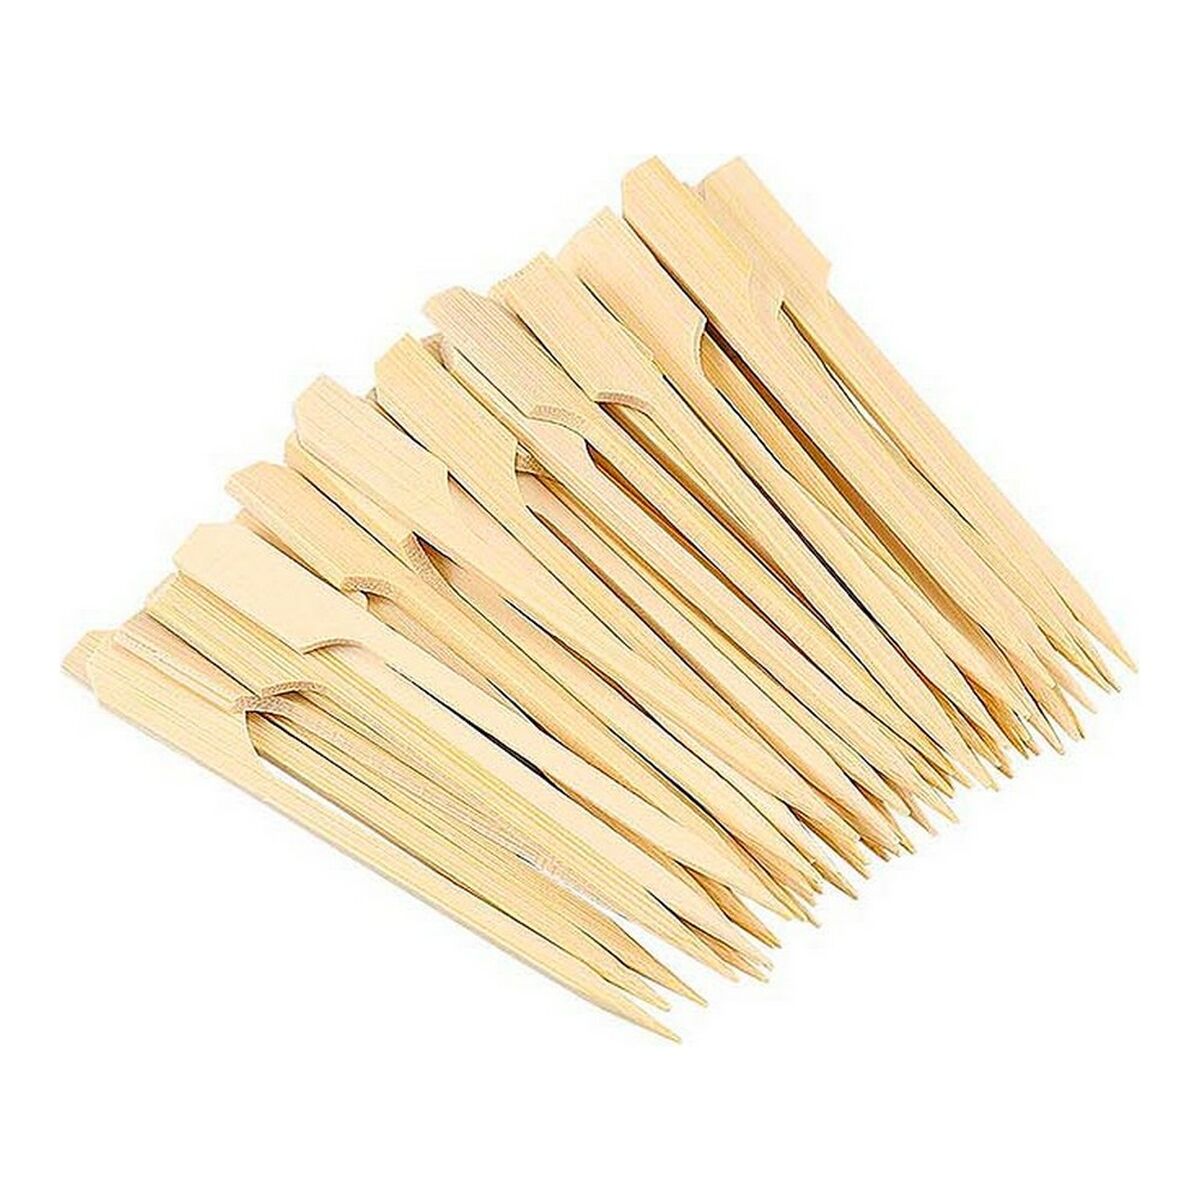 Bamboo toothpicks (12 cm)